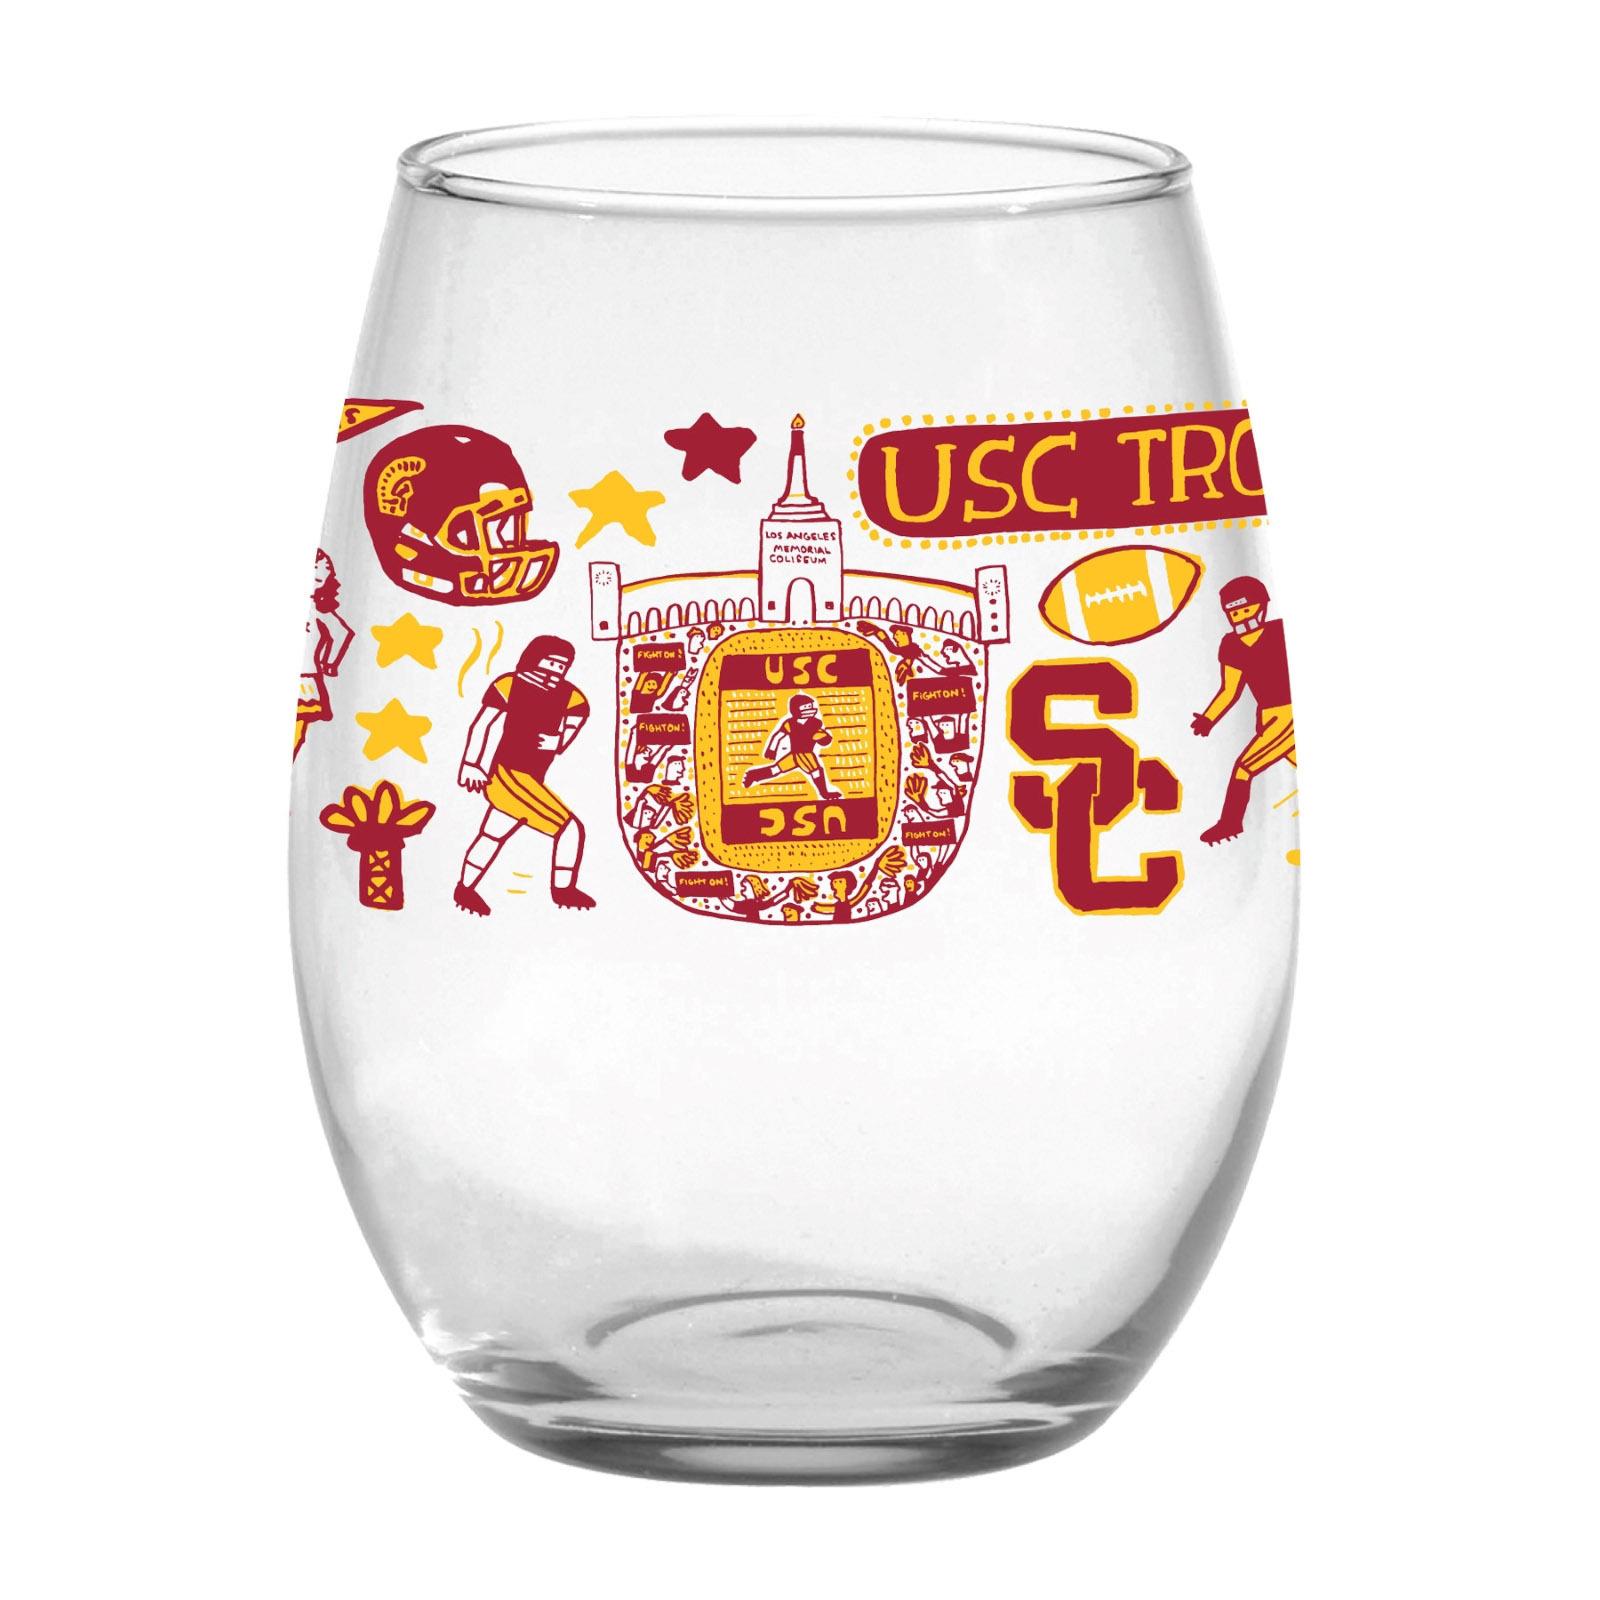 Coliseum Julia Gash Stemless Wine Glass Clear - Digital Print image01